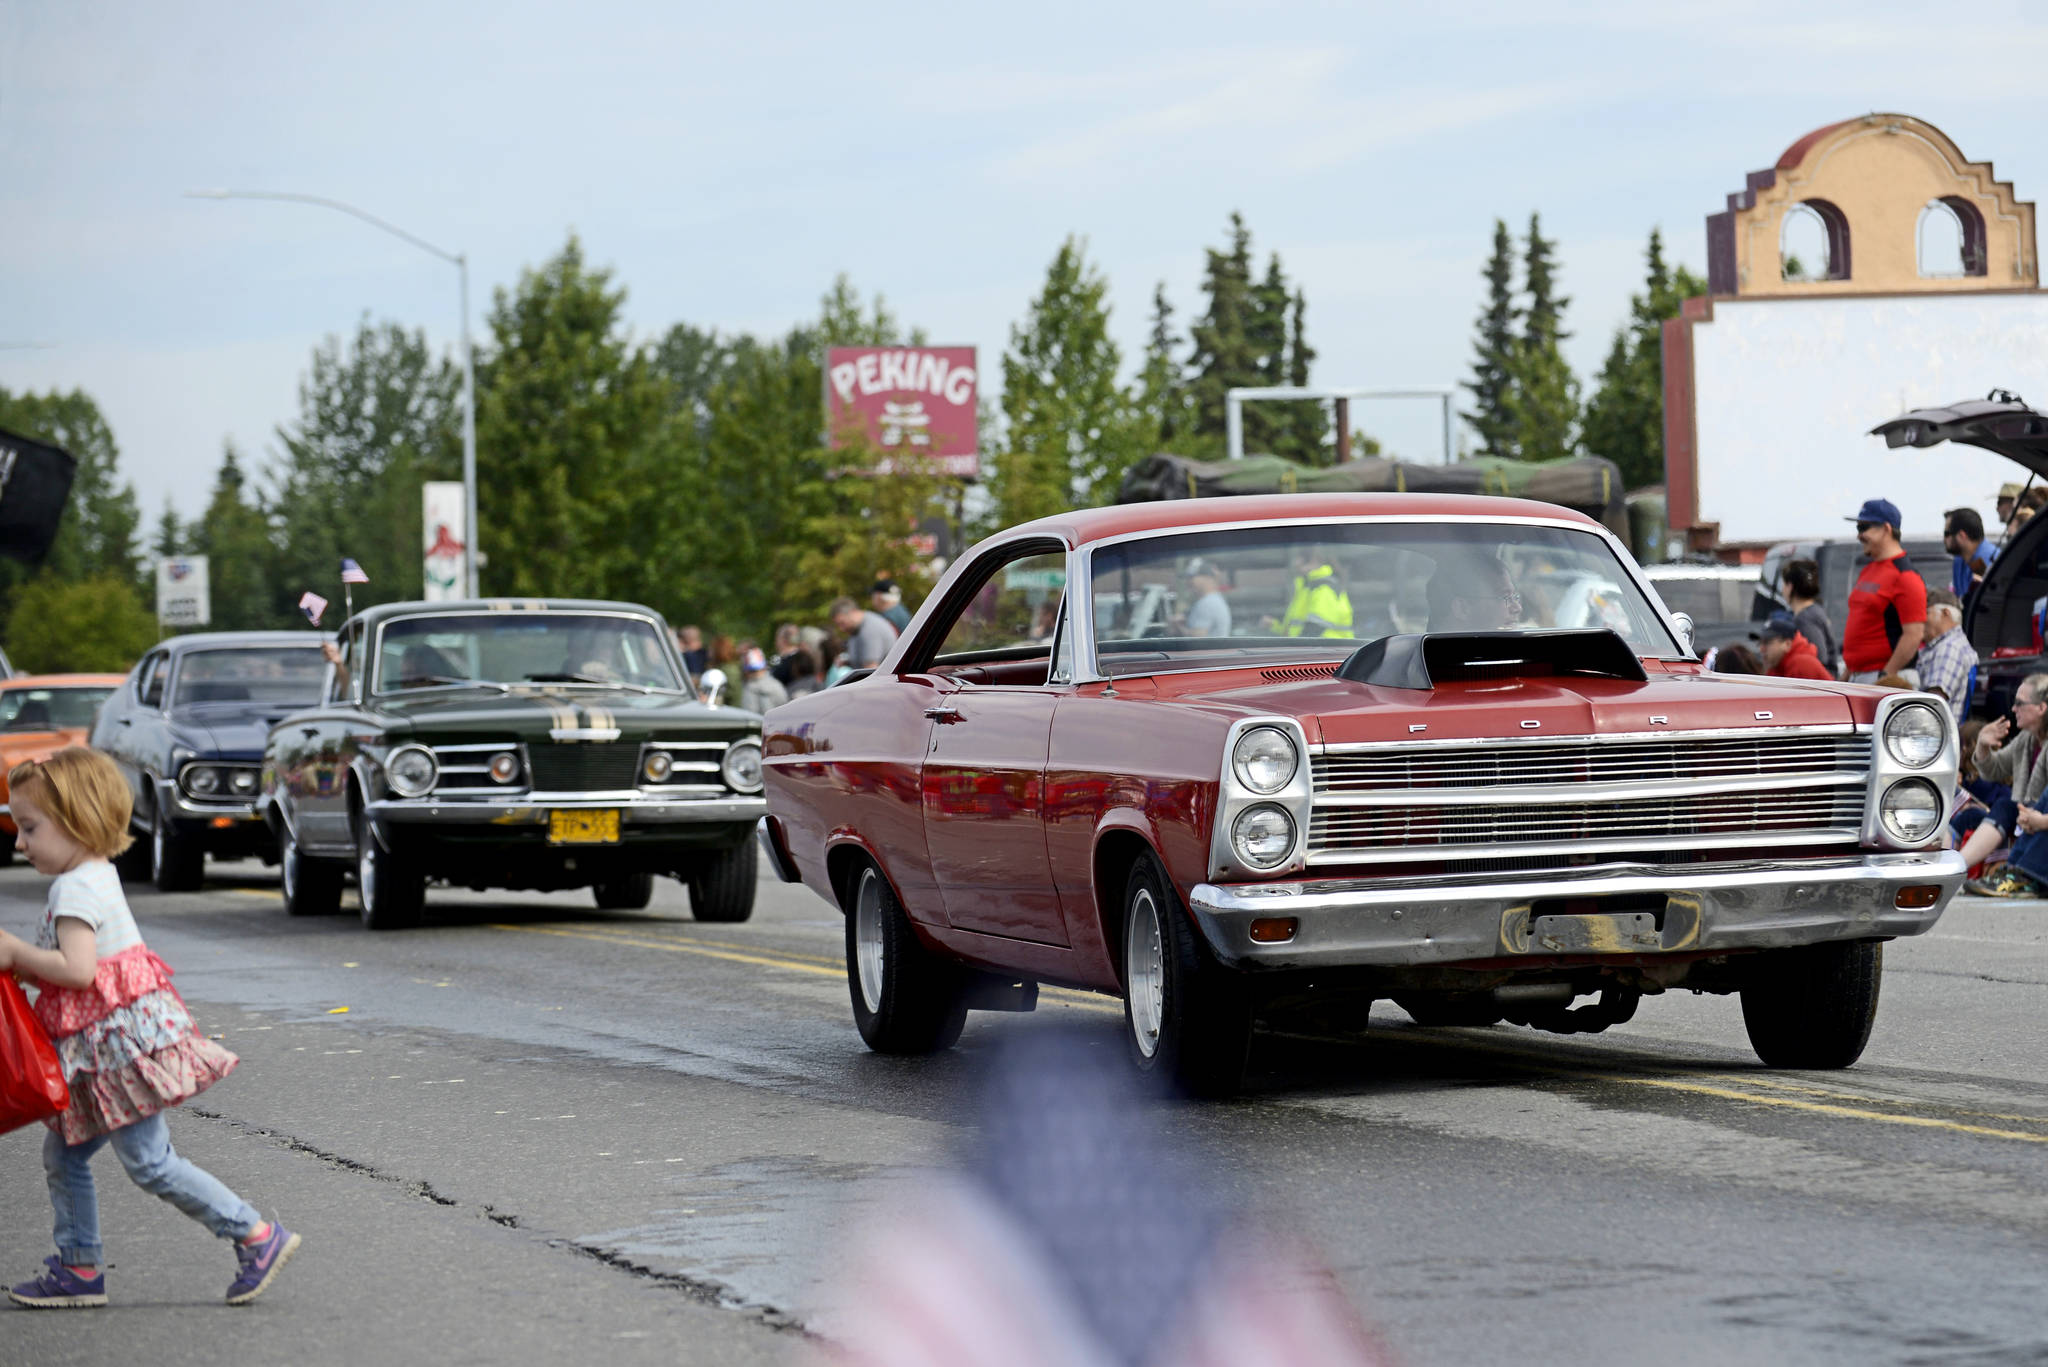 Members of the Kaknu Kruzers Car Club drive down Main Street Loop in Kenai’s Fourth of July parade on Wednesday, July 4, 2018 in Kenai, Alaska (Ben Boettger/Peninsula Clarion)